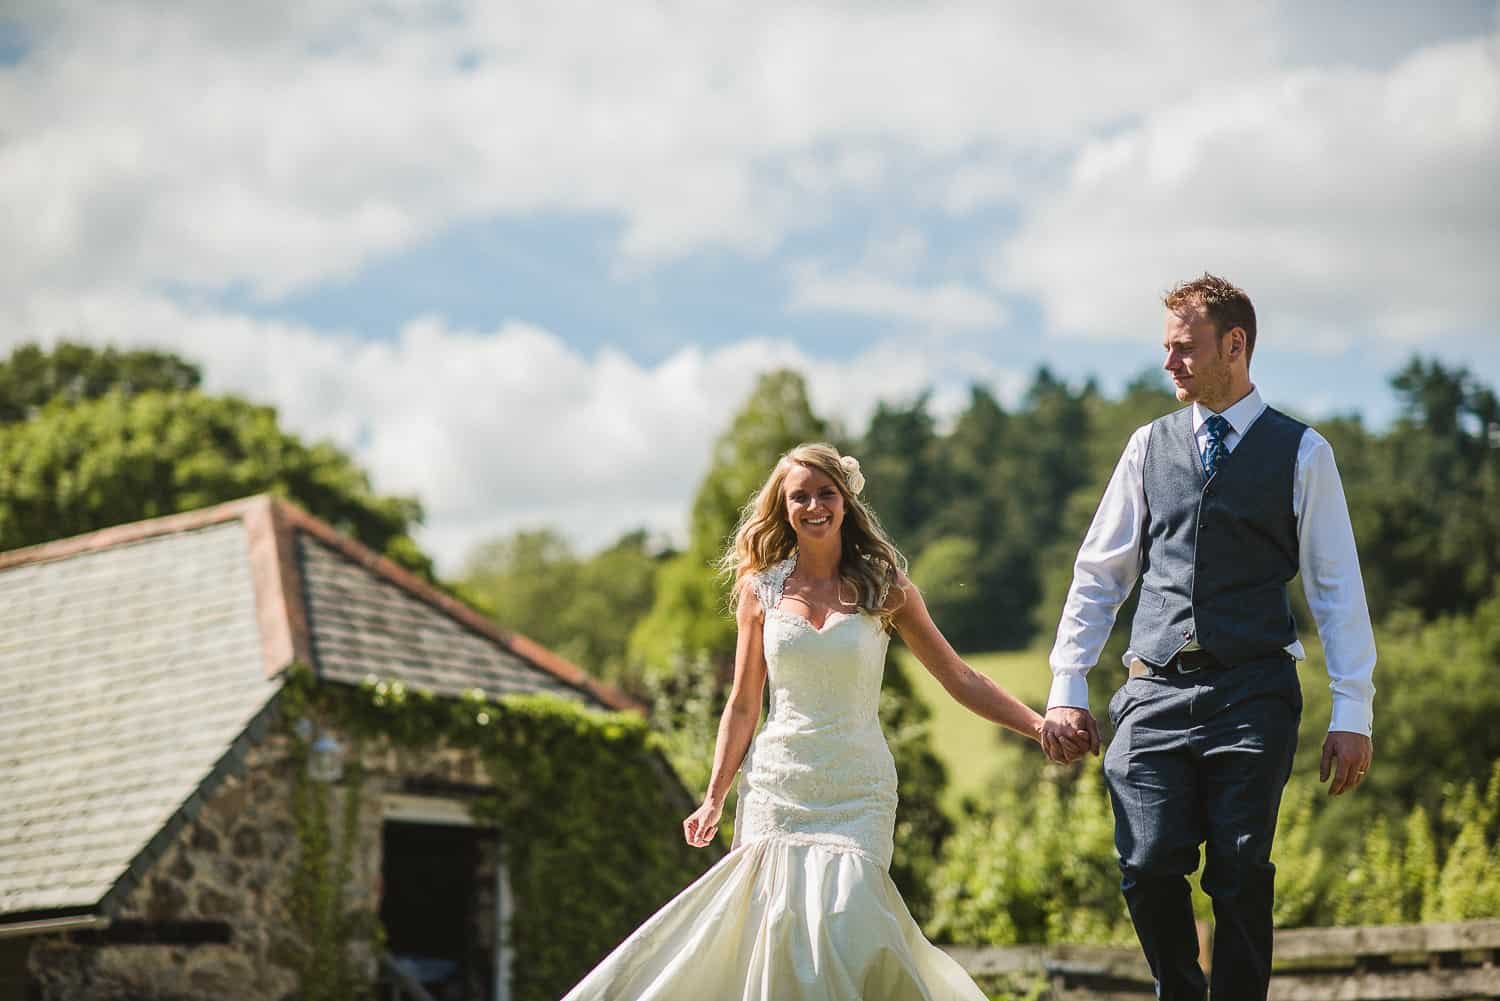 The Great Barn Devon Wedding Venue